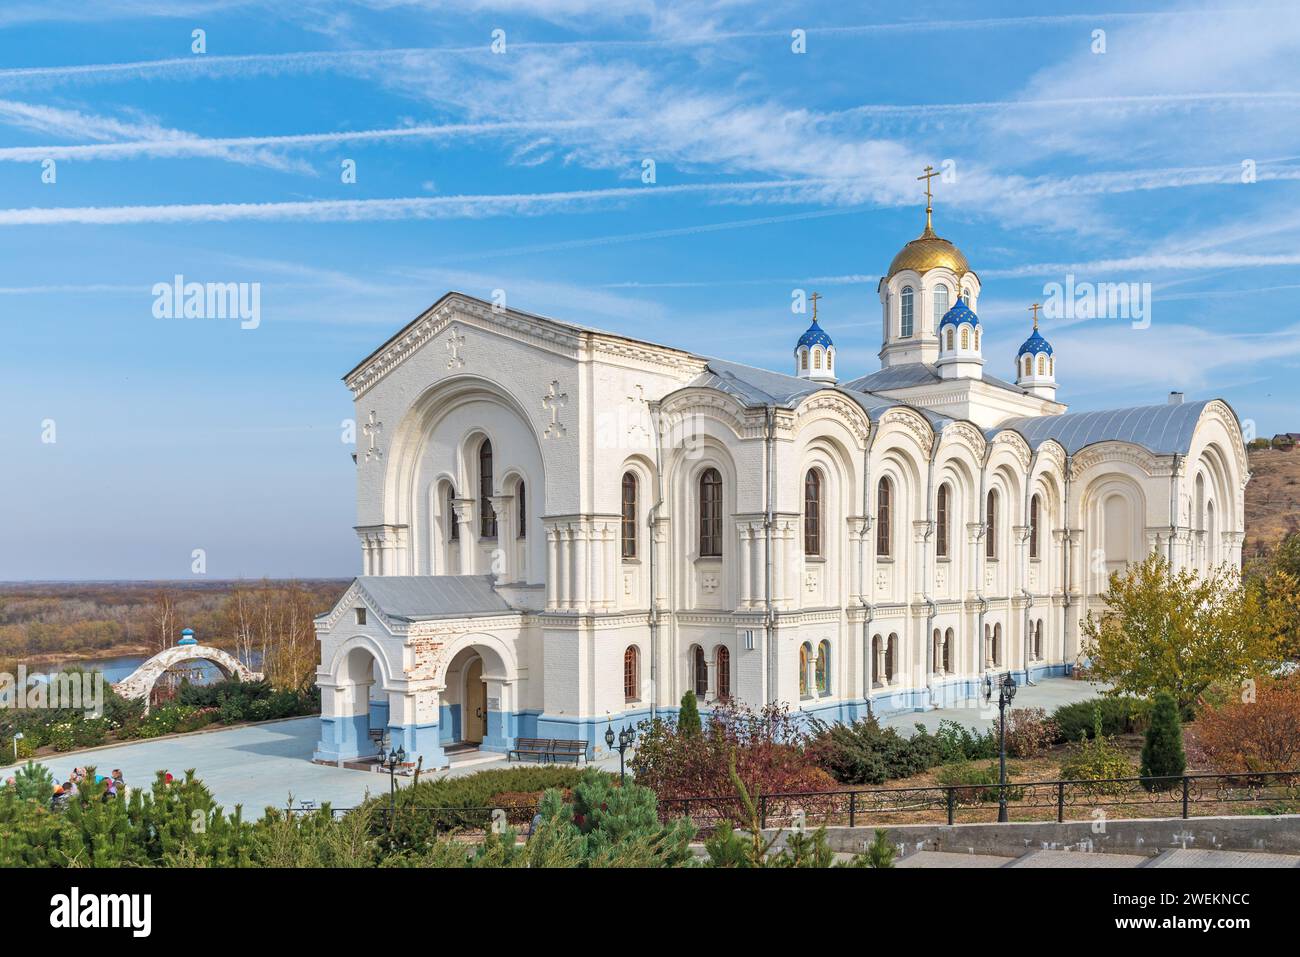 Ust-Medveditsky Spaso-Preobrazhensky Monastery. Serafimovich. Volgograd region. Russia Stock Photo